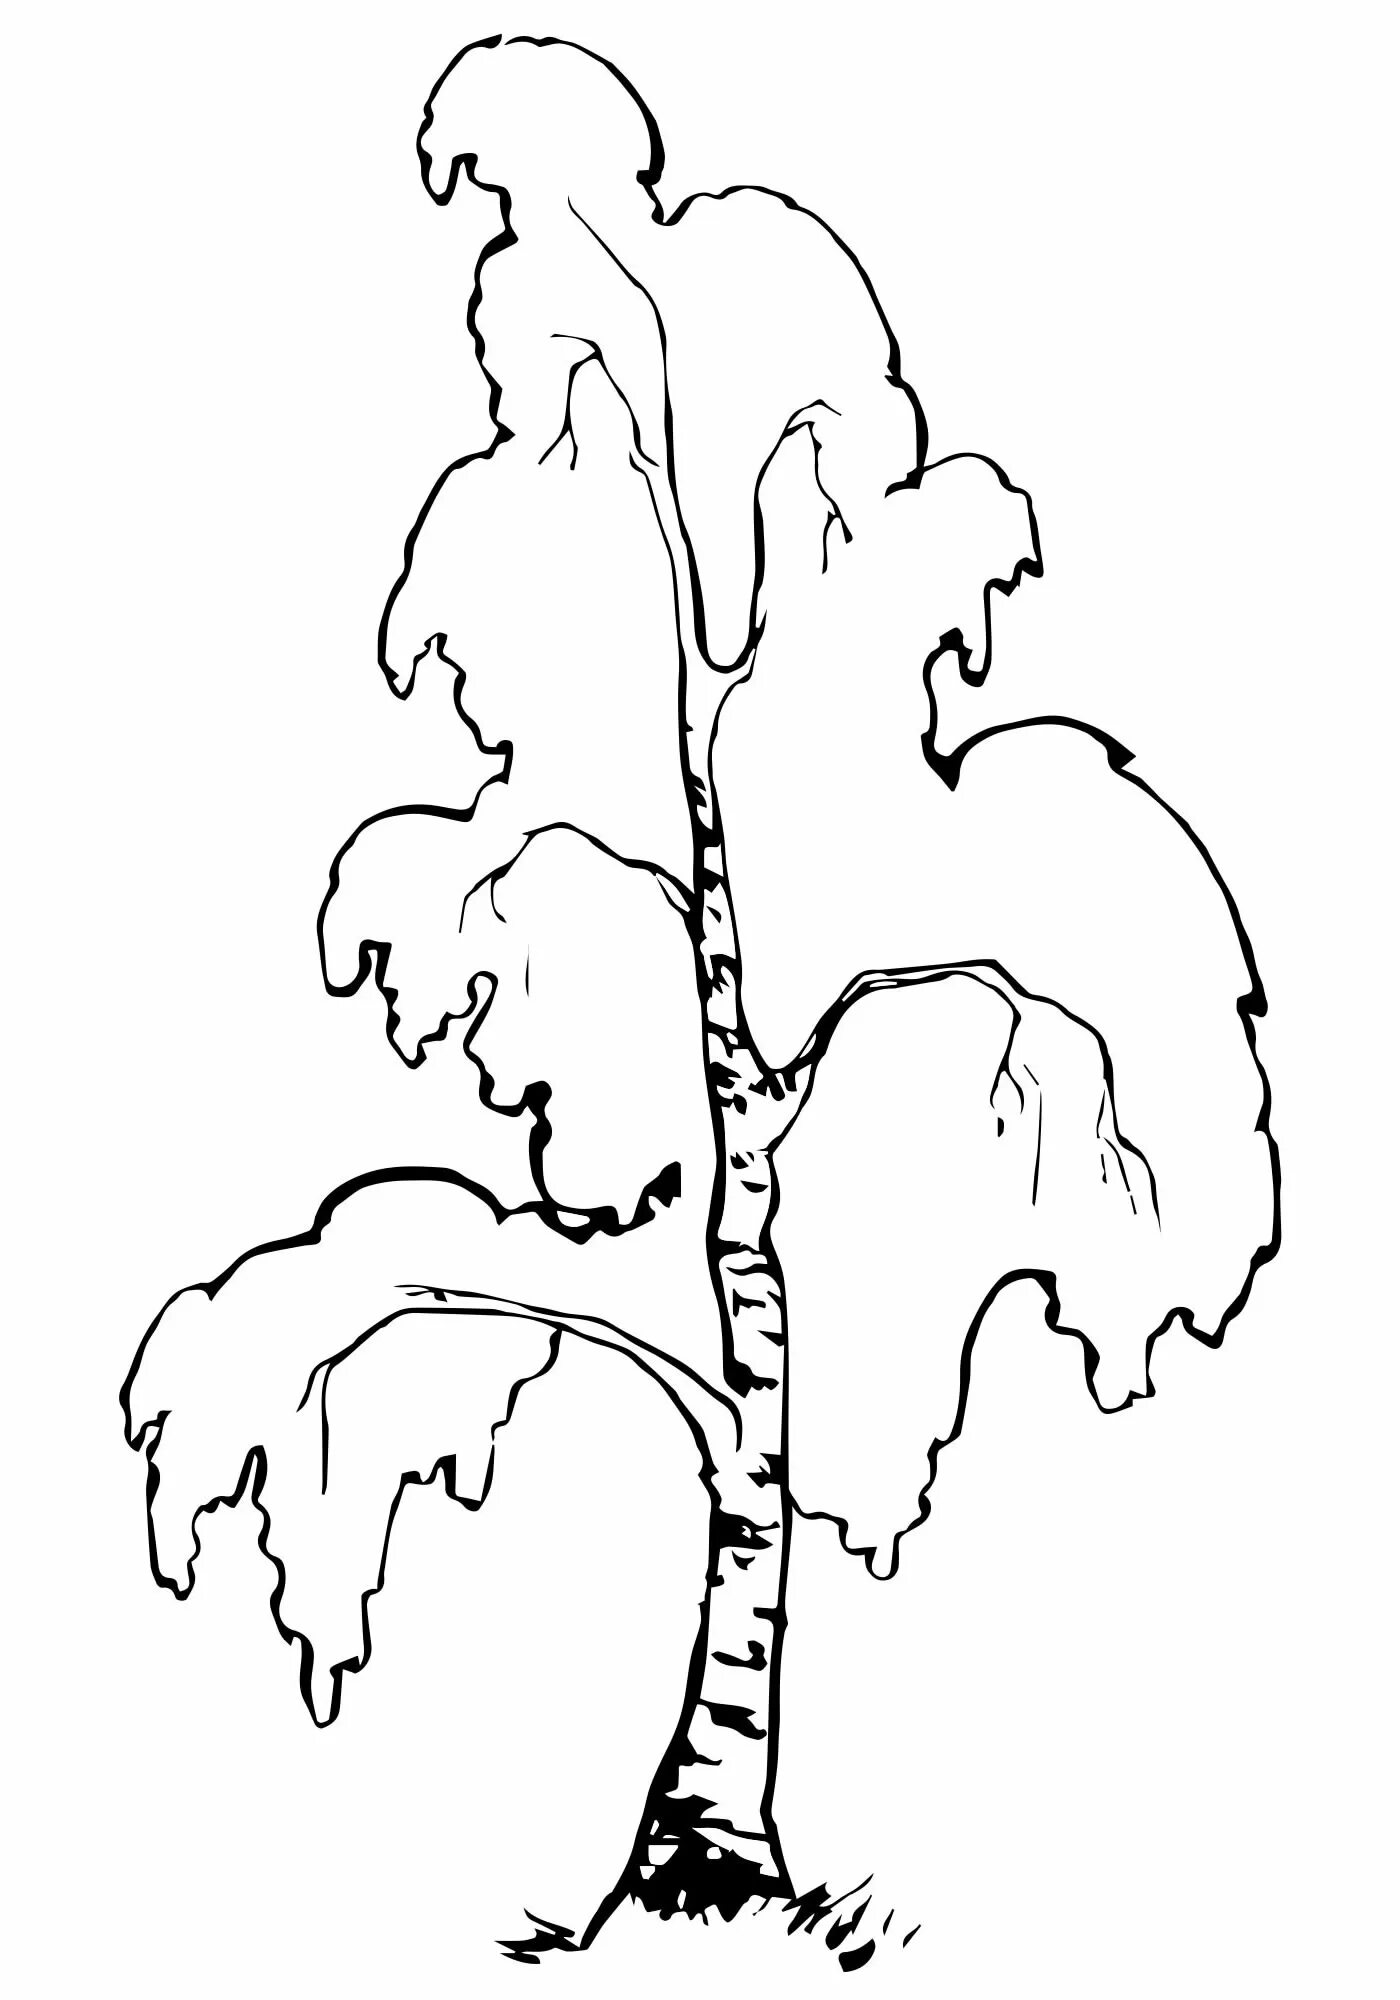 Береза дерево #8